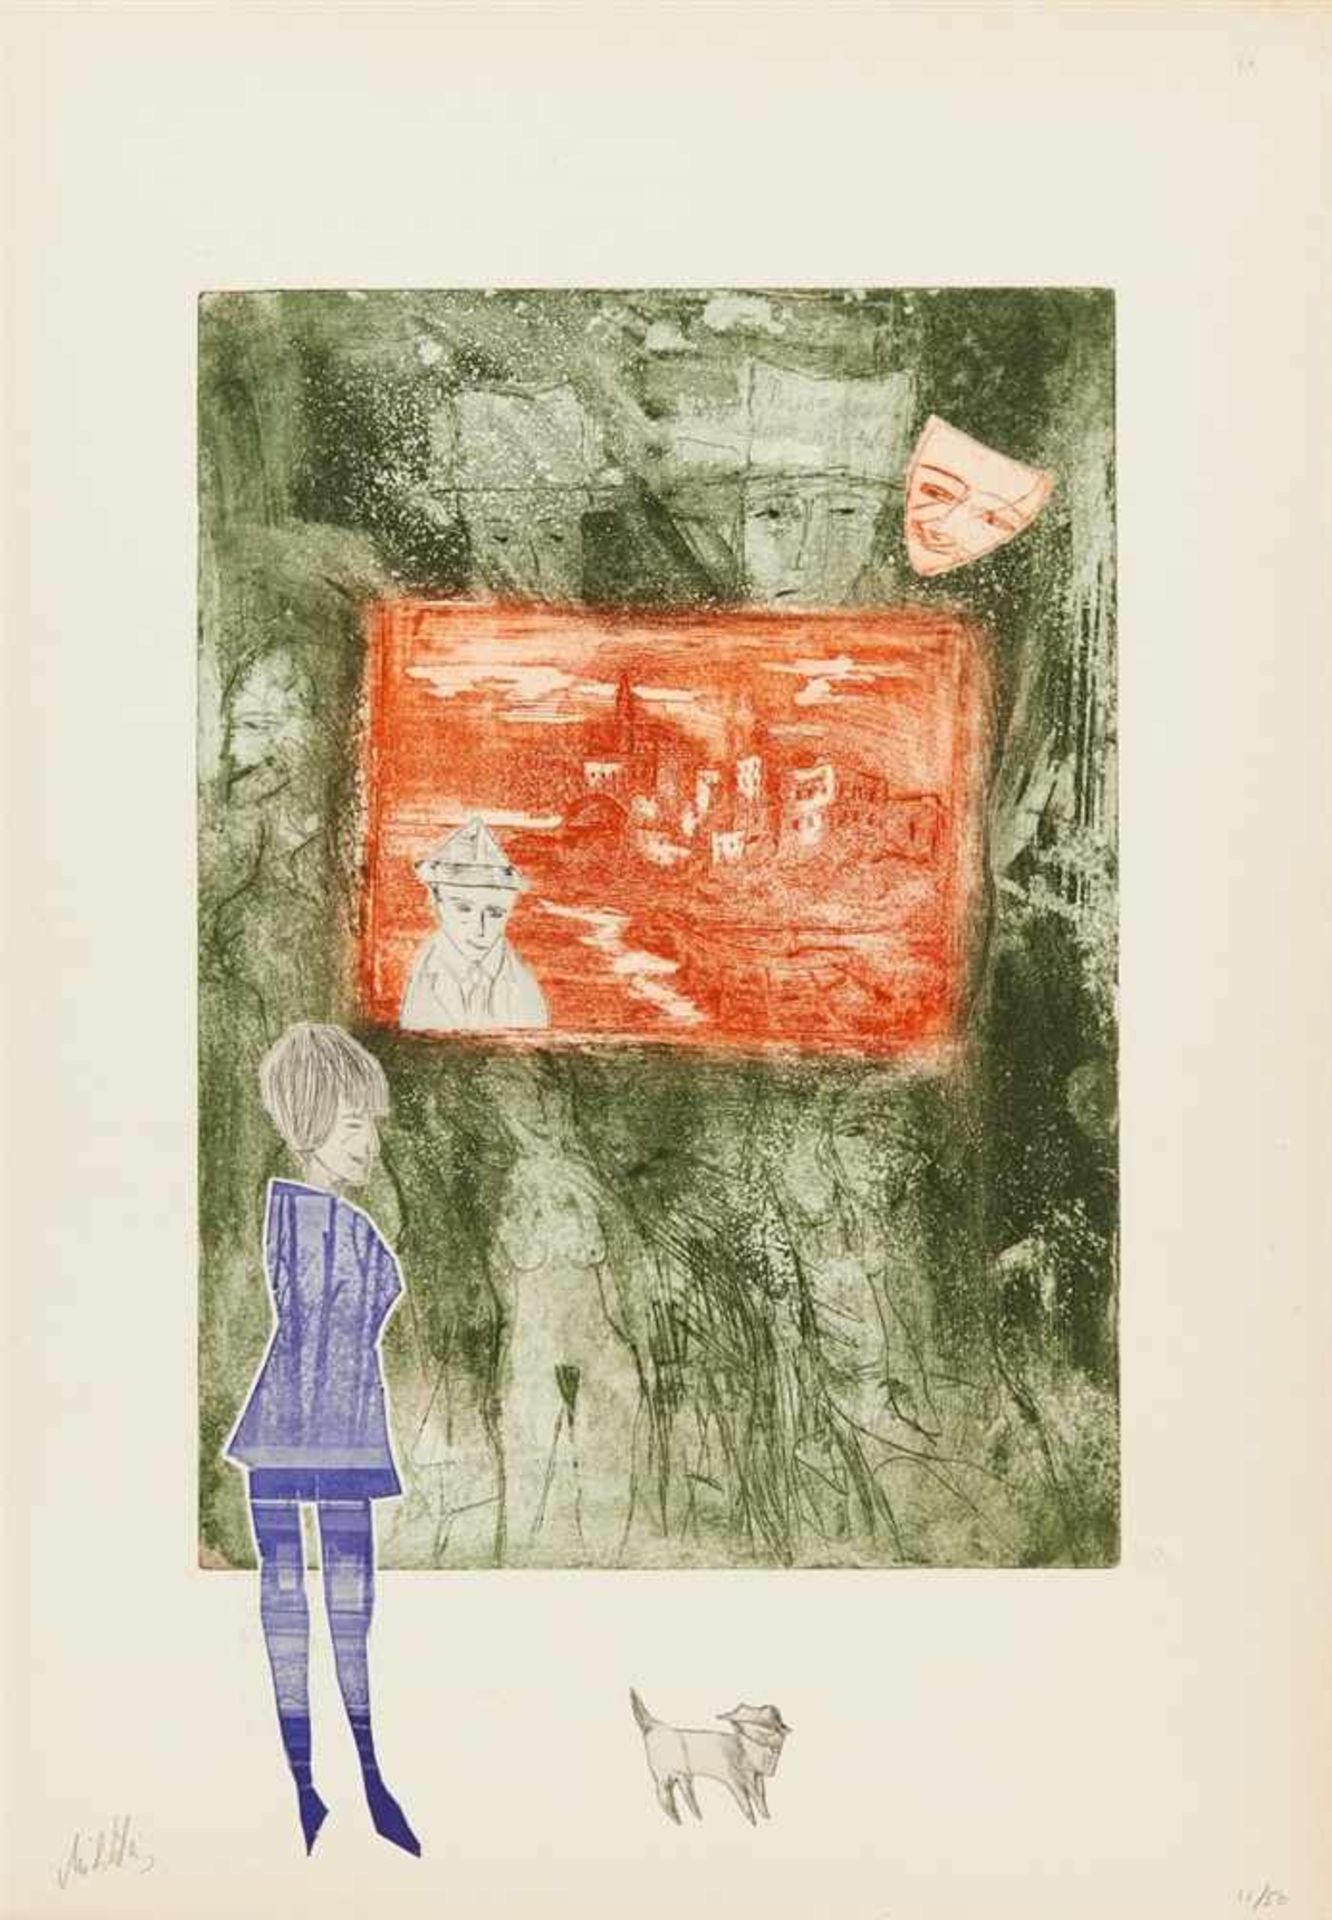 MILSHTEIN, ZWI JEAN PETIT (Hrsg.): Interdits. Genf: Rousseau 1972. 56,5 x 40 cm. Folge von 10